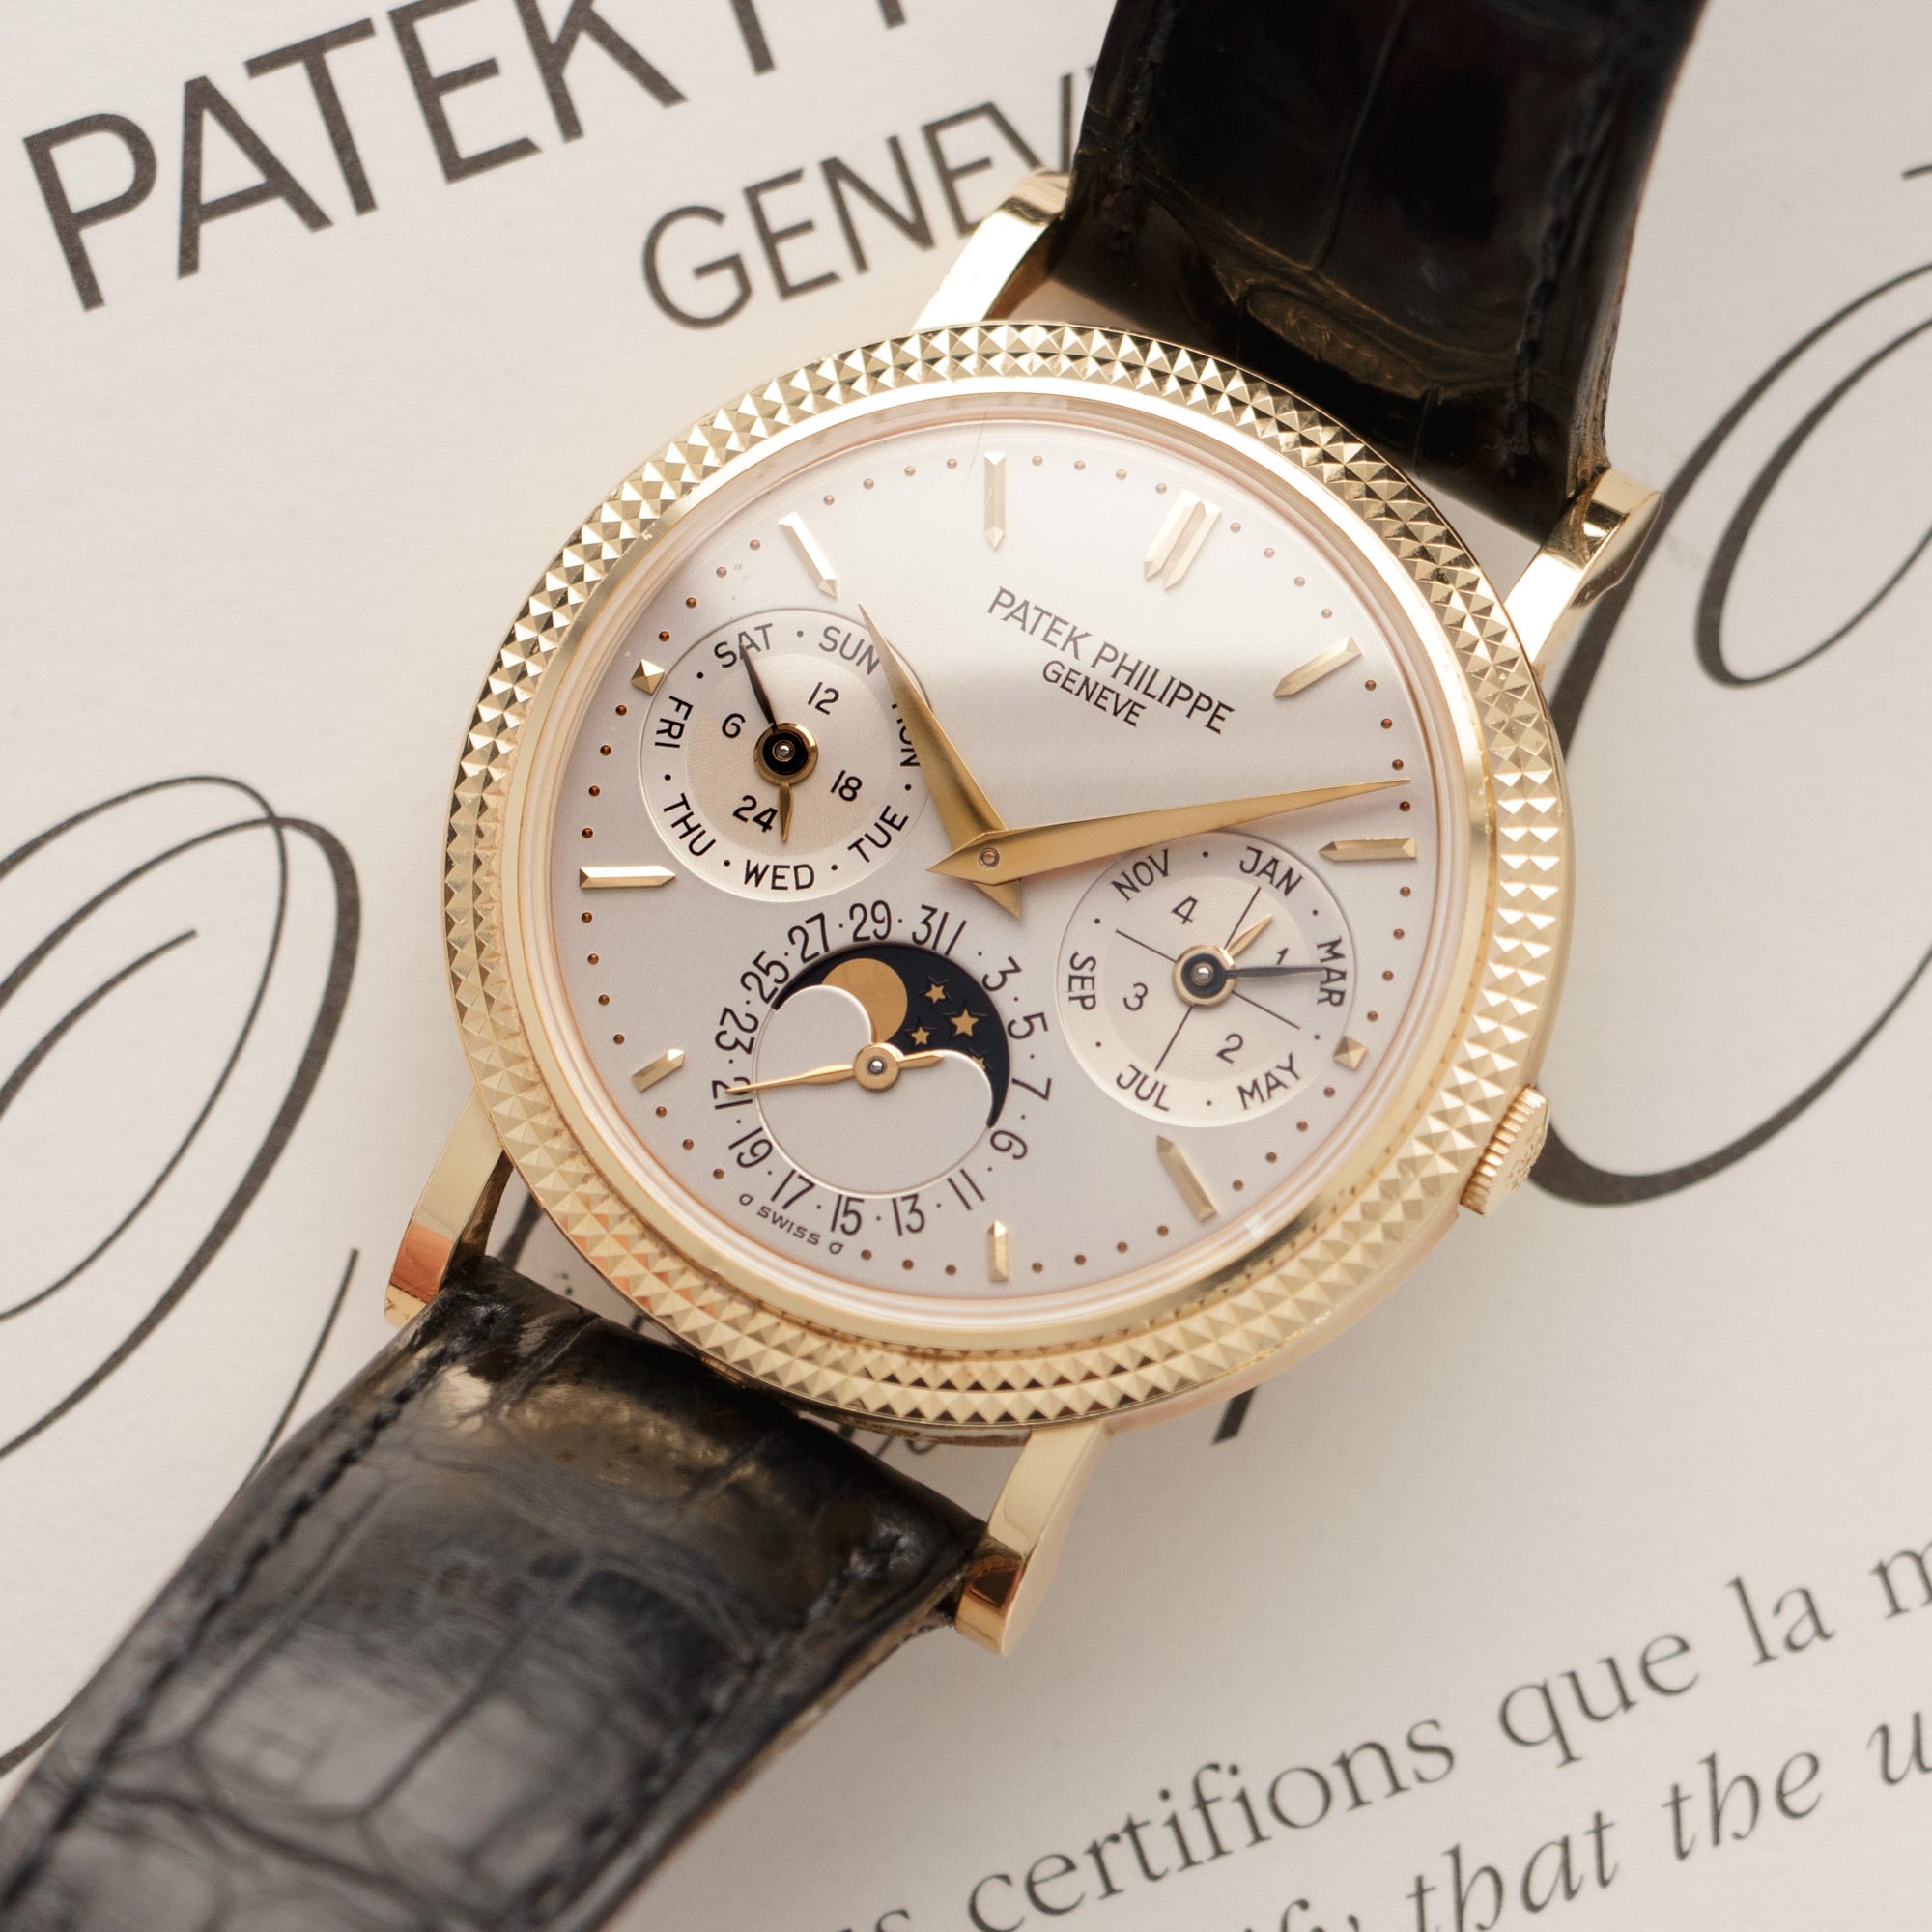 Patek Philippe - Patek Philippe Yellow Gold Perpetual Calendar Automatic Watch Ref. 5039 - The Keystone Watches